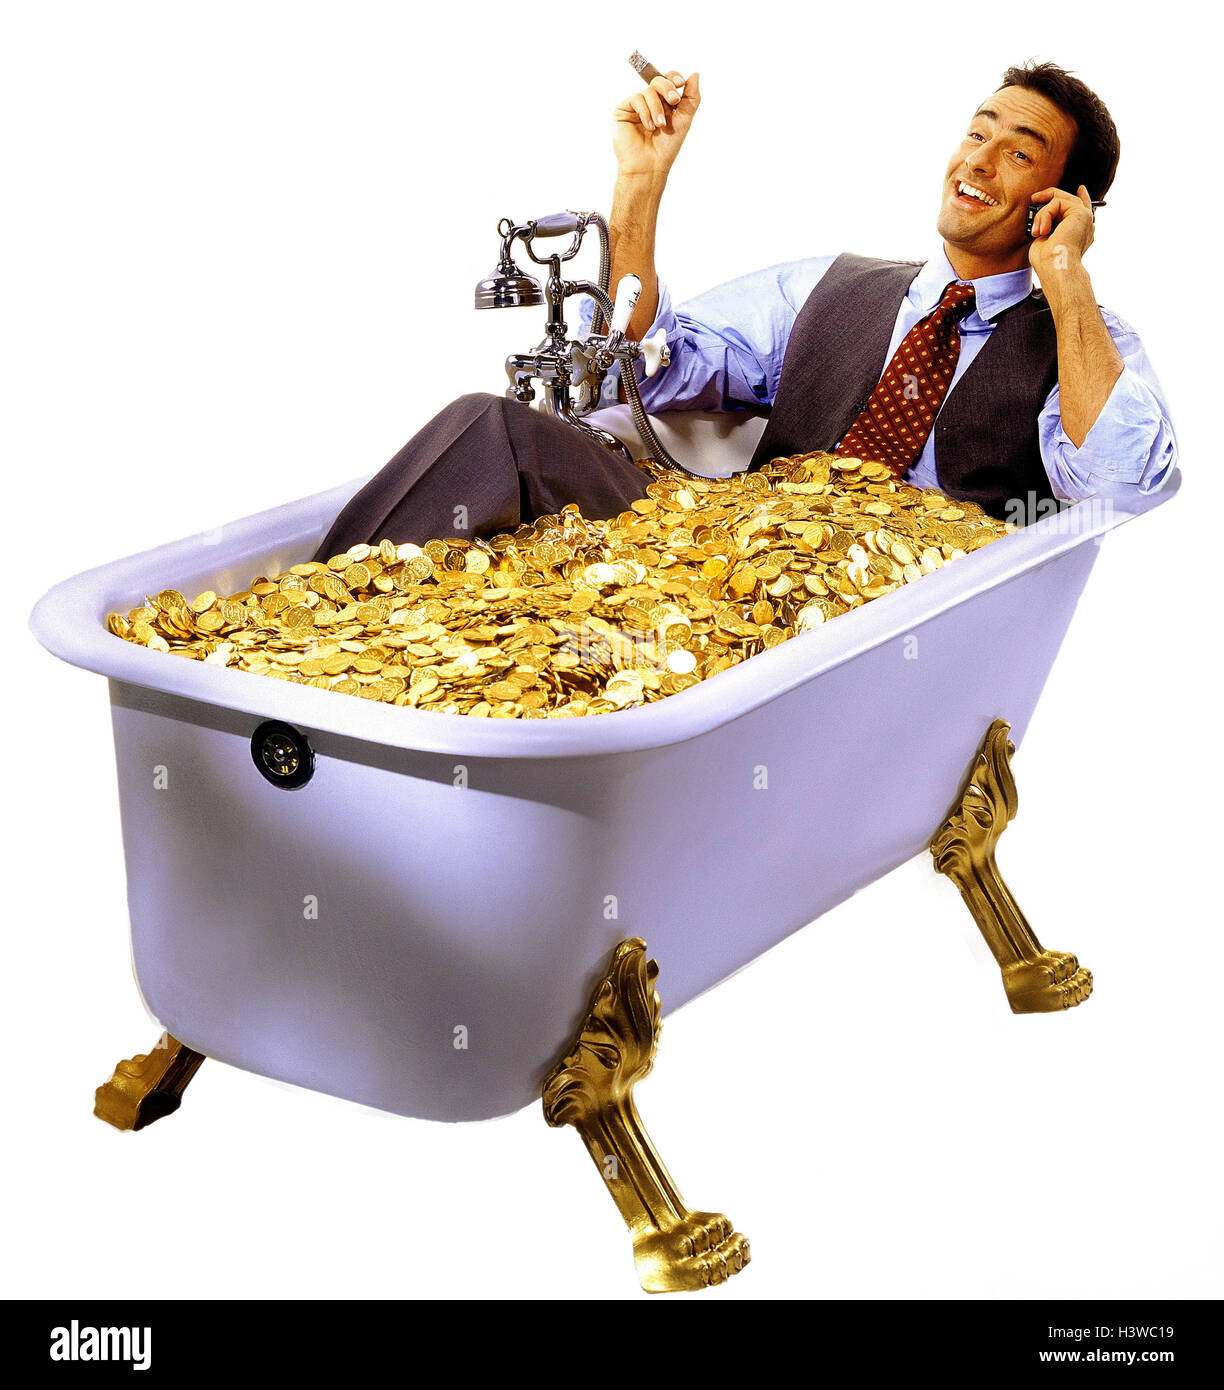 Businessman, mobile phone, cigar, bath, golden coins, profit, wealth concepts, business, man, 'have a bath', gold, money, richly, luck, prosperity, success, happily, enjoy, satisfaction, call up, studio, copy space, Stock Photo